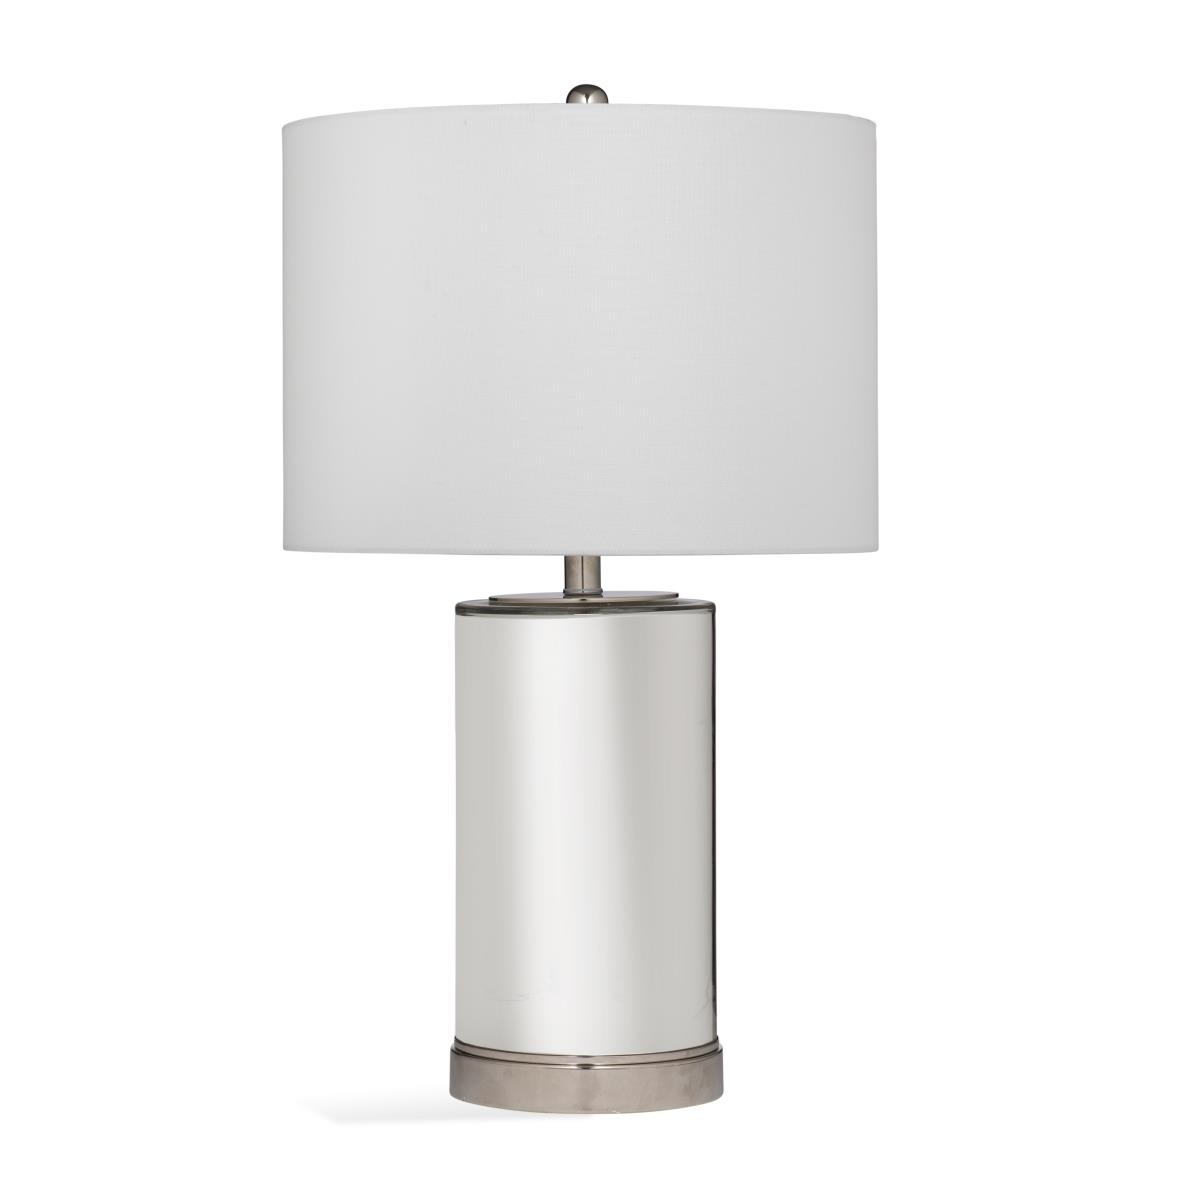 L3574t Larisa Table Lamp, Mercury With Chrome - 16 X 16 X 27 In.